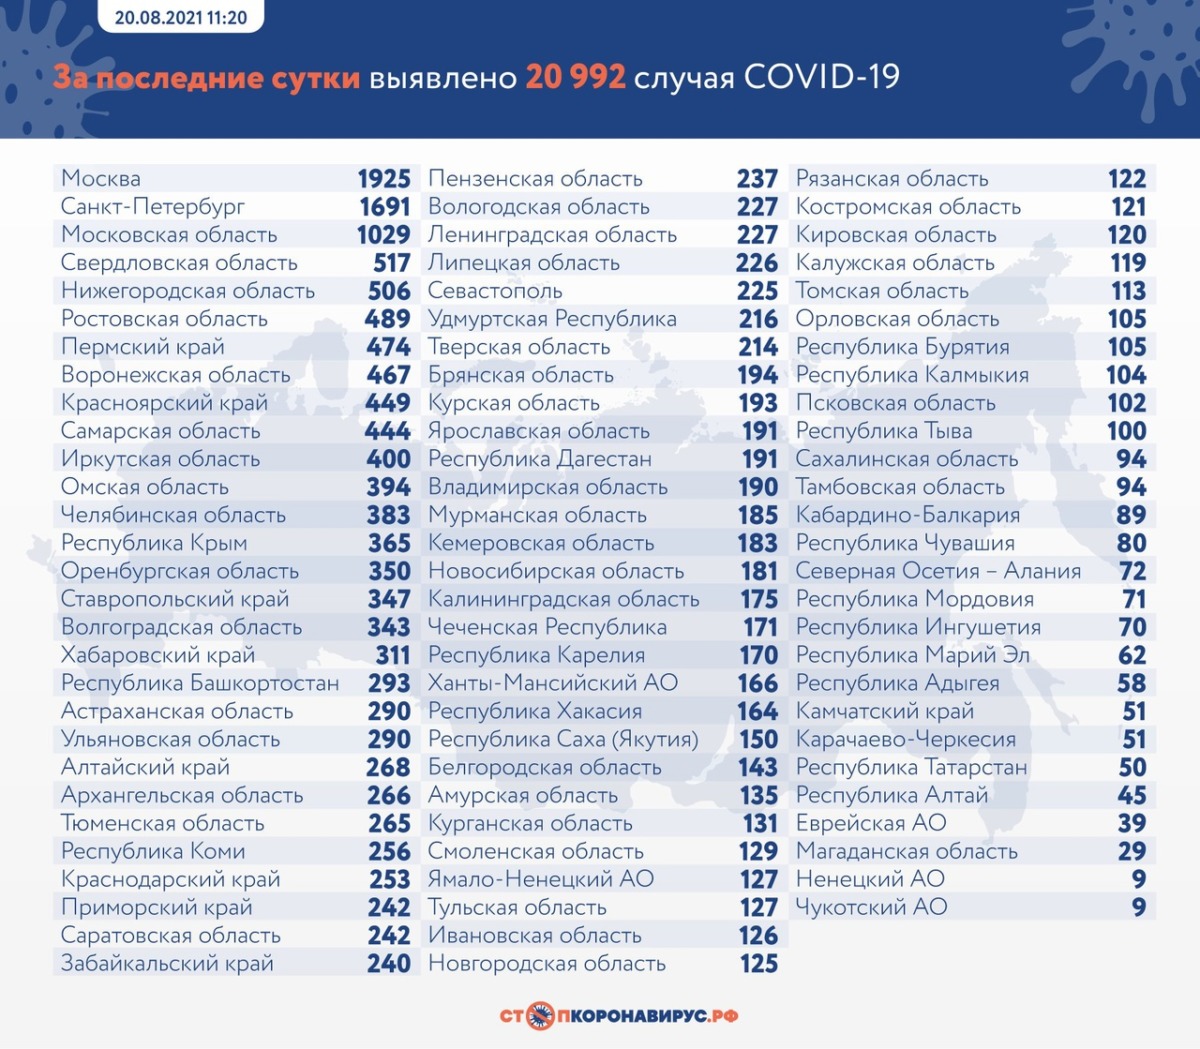 Оперативная статистика по коронавирусу в России на 20 августа